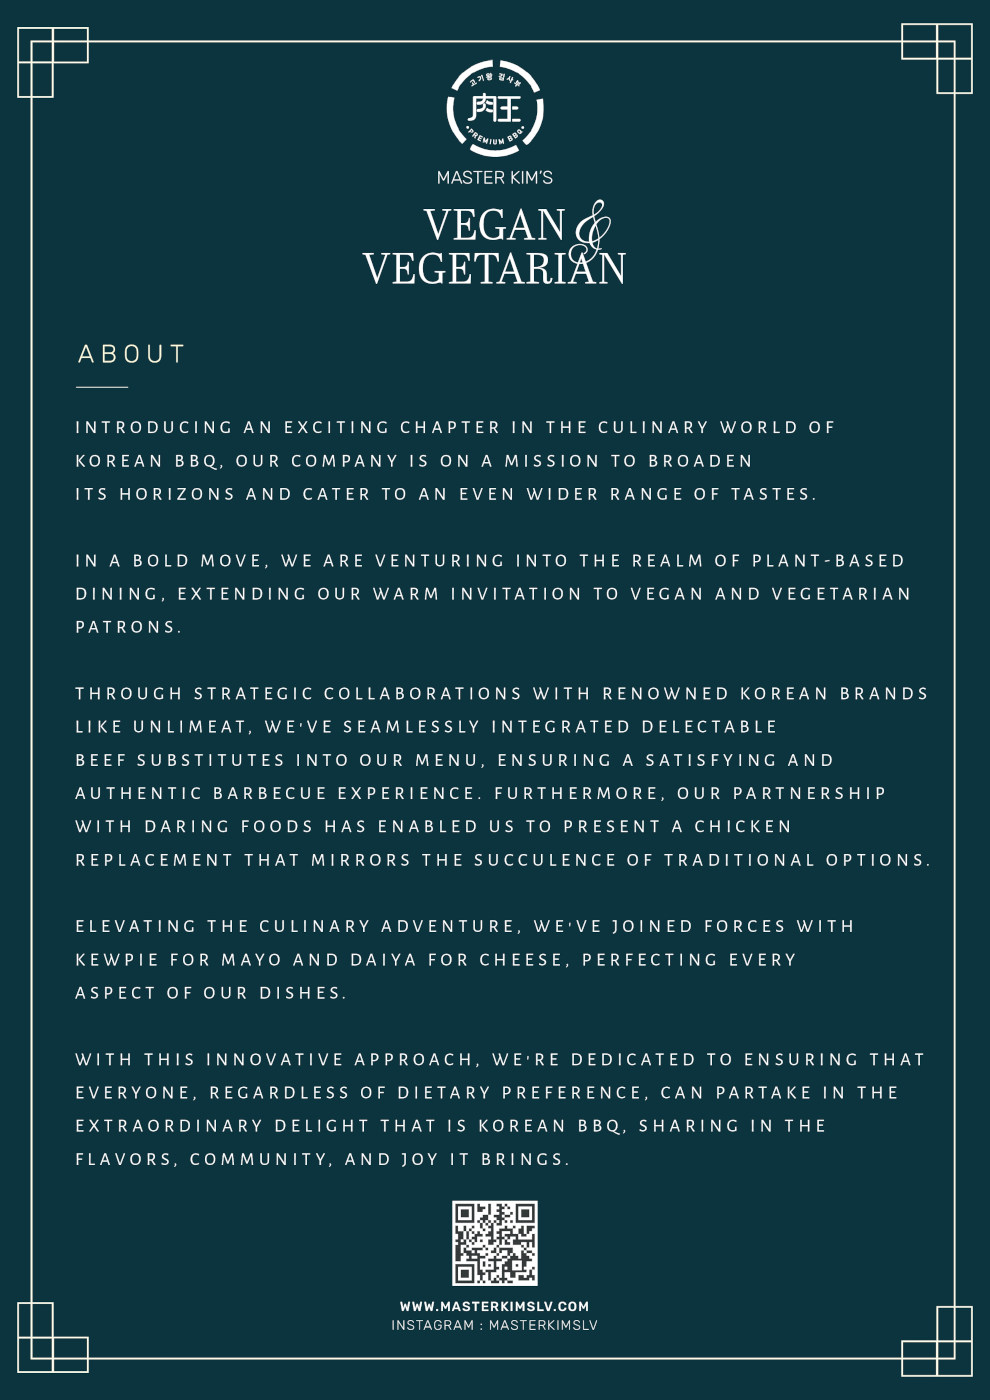 Vegan menu page 2